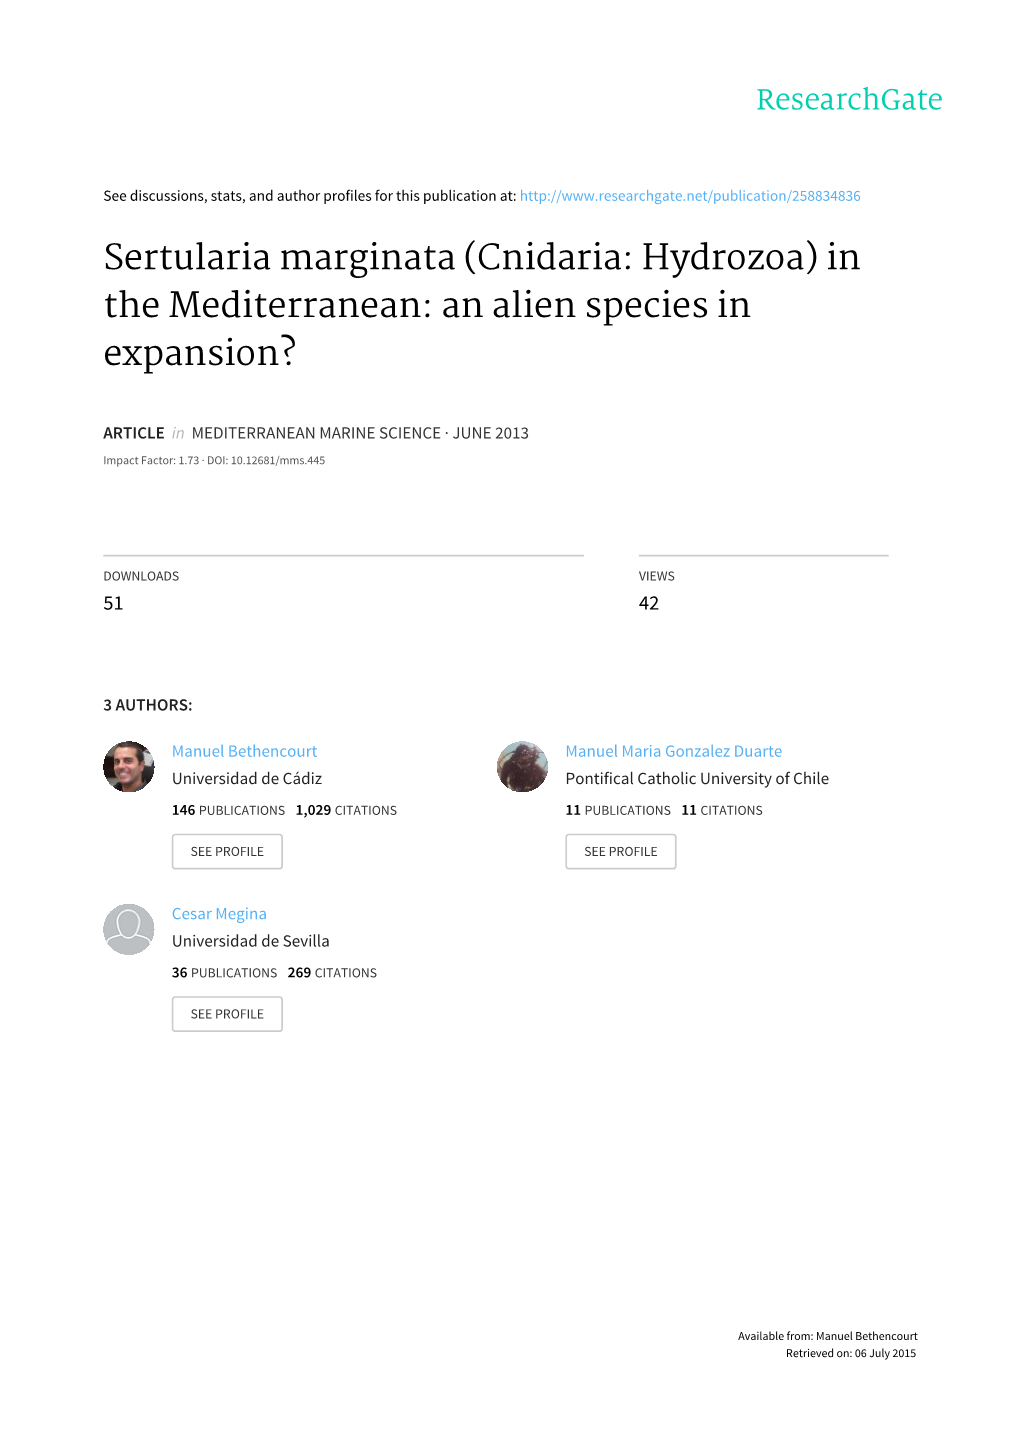 Sertularia Marginata (Cnidaria: Hydrozoa) in the Mediterranean: an Alien Species in Expansion?